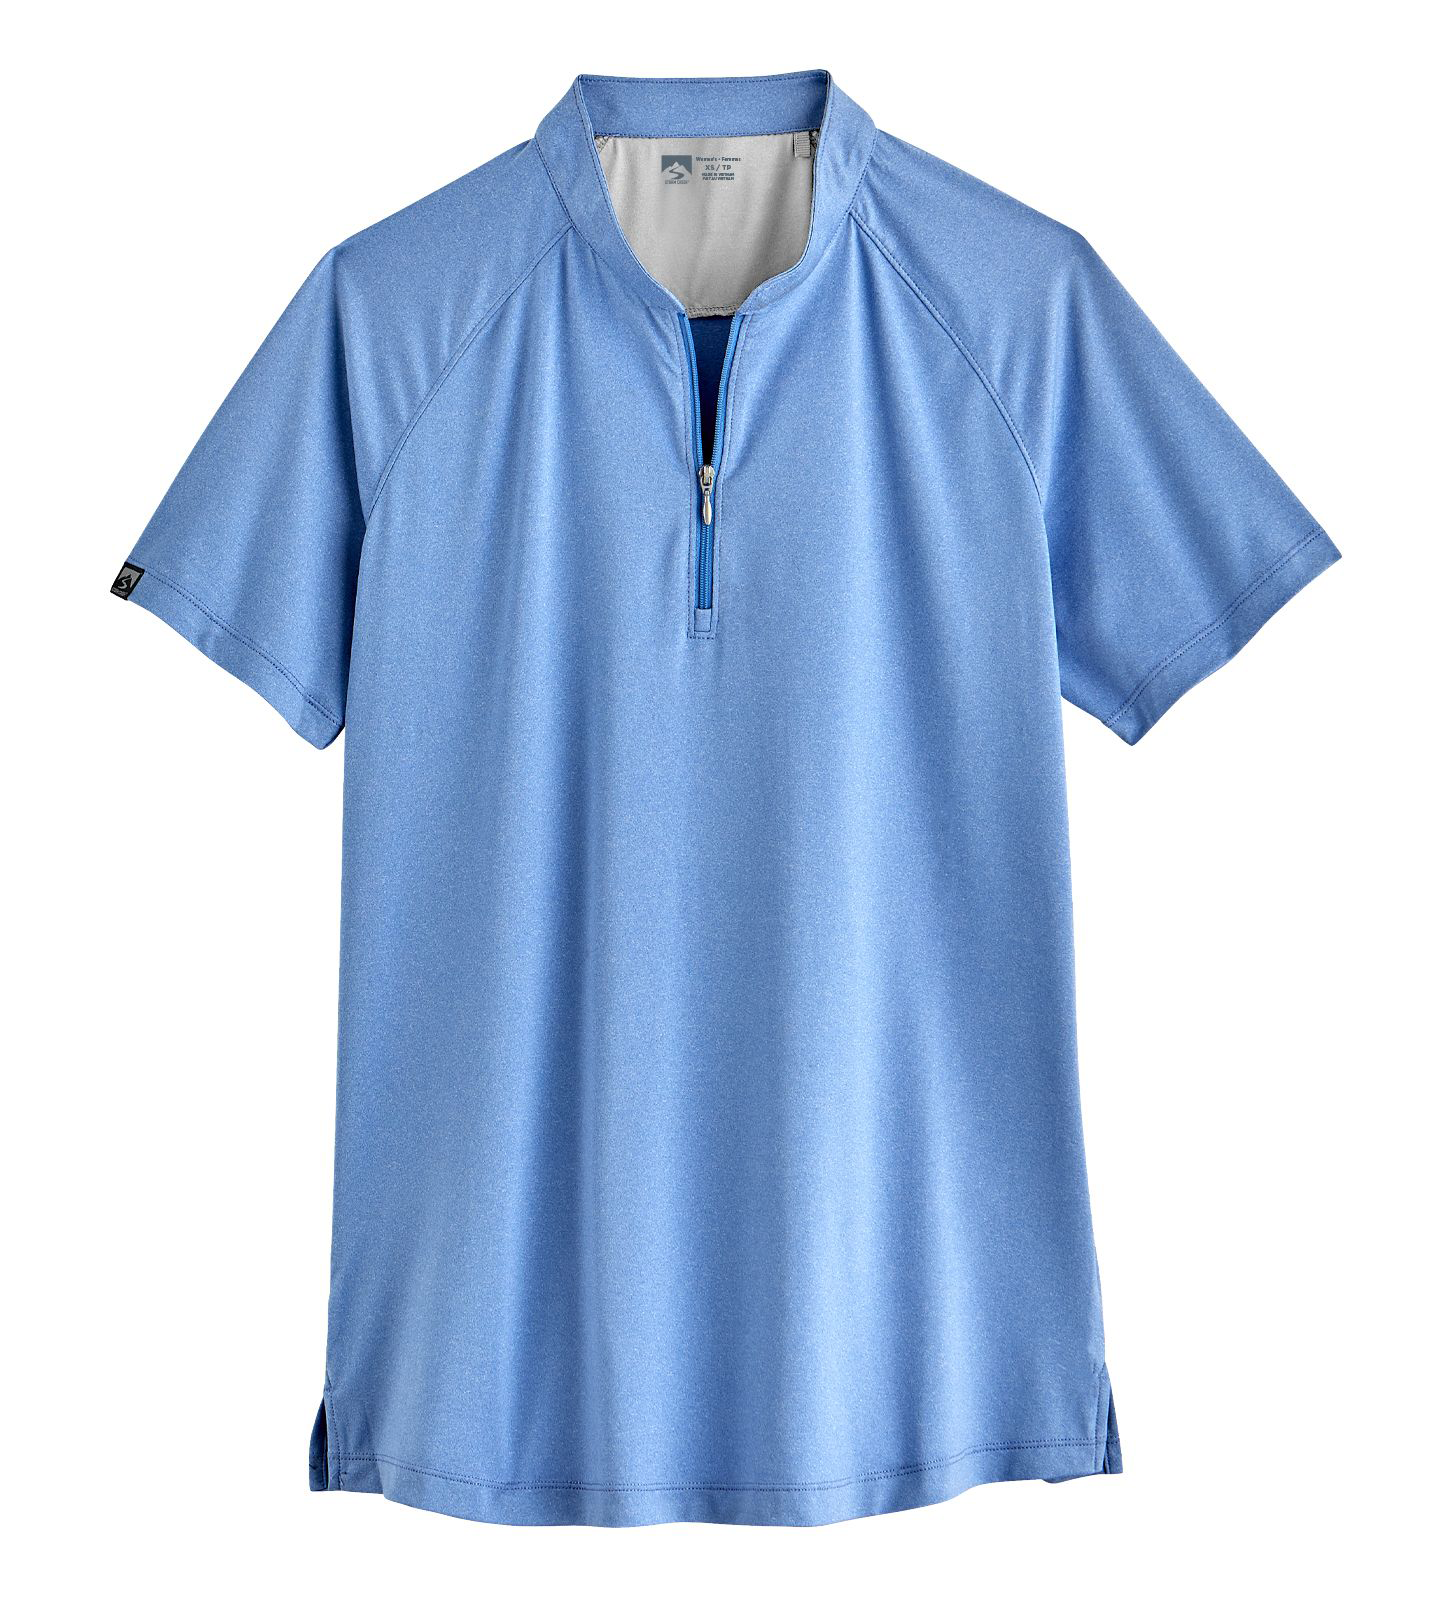 Storm Creek Visionary Polo Short-Sleeve Shirt for Ladies - Peri Blue - XL